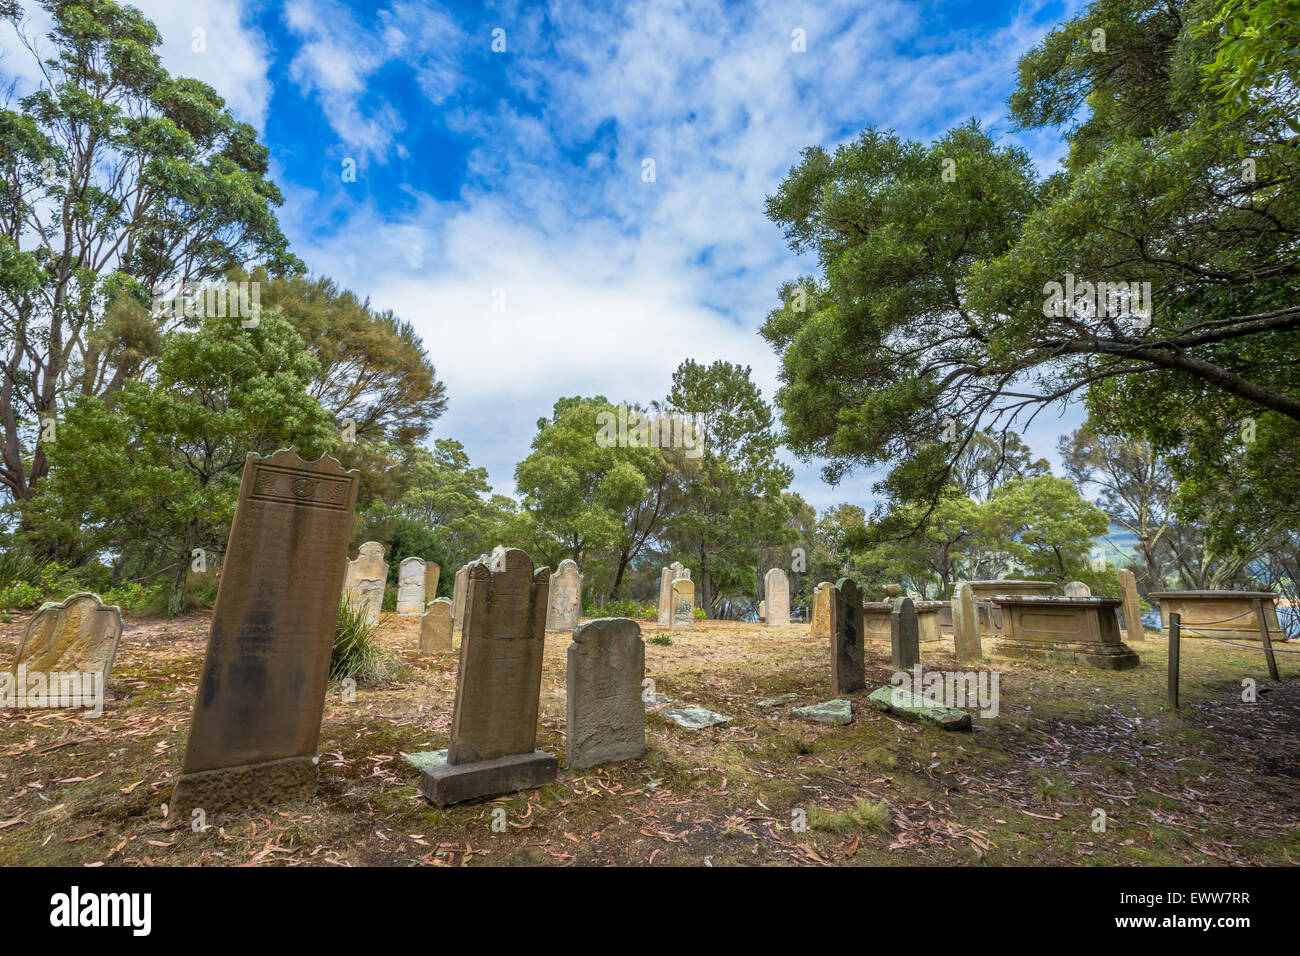 Old gravestones in the Isle of the Dead located in the harbor off Port Arthur, Tasman Peninsula, Tasmania, Australia. . Stock Photo